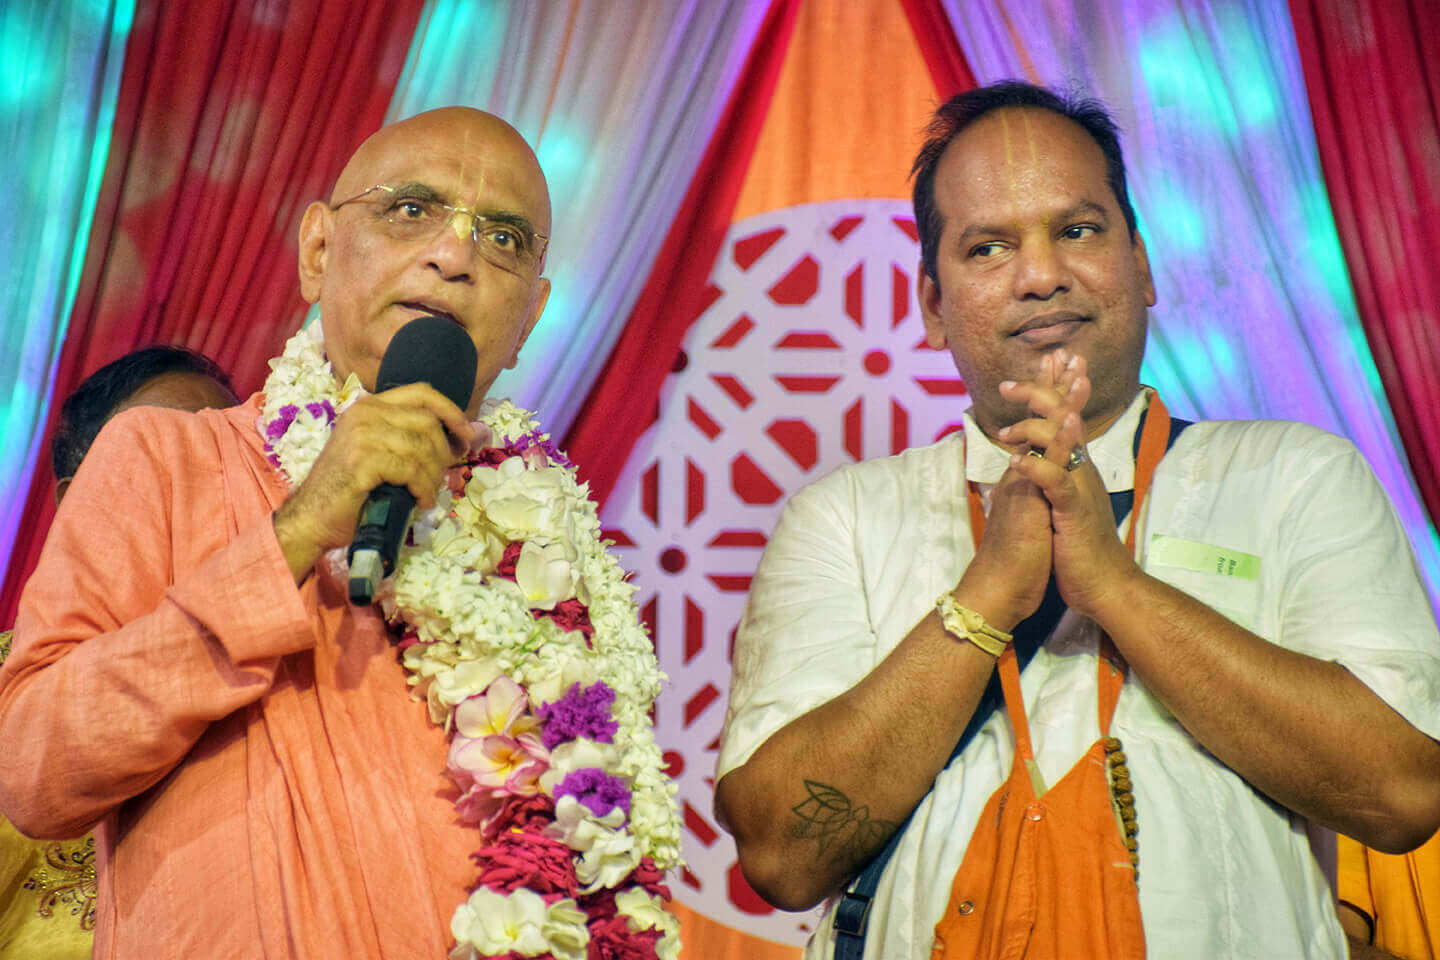 Bhakti Caru Swami with Braja Vilas das on stage at program in Bangladesh